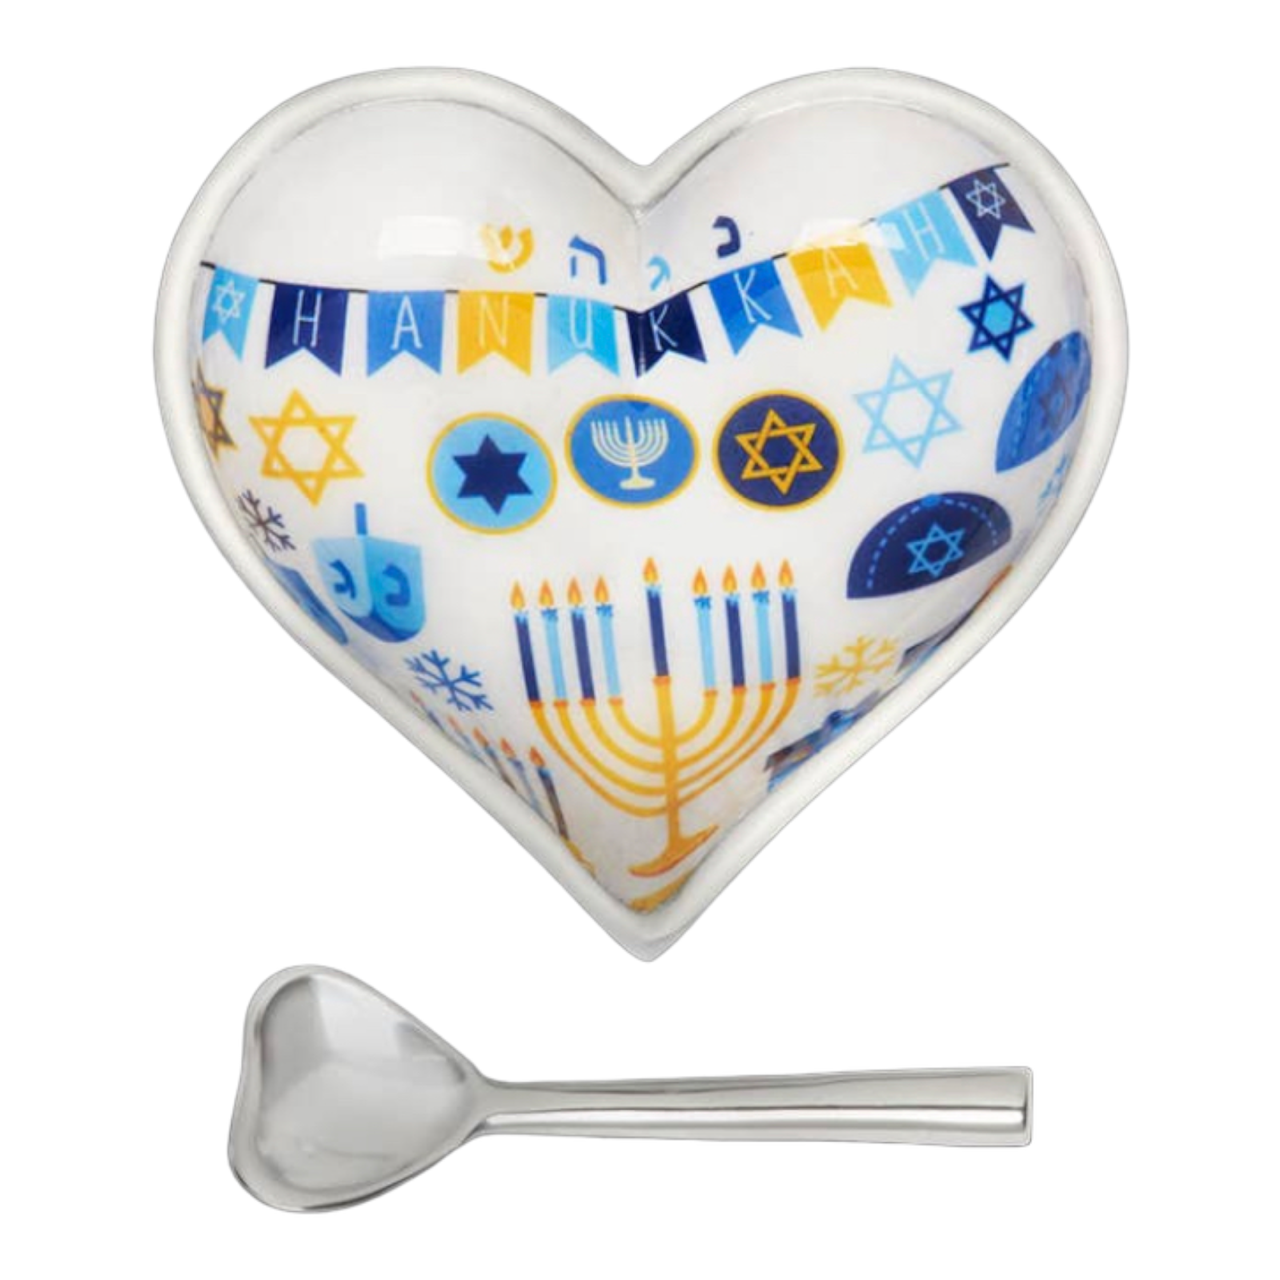 Hanukkah Heart And Heart Spoon